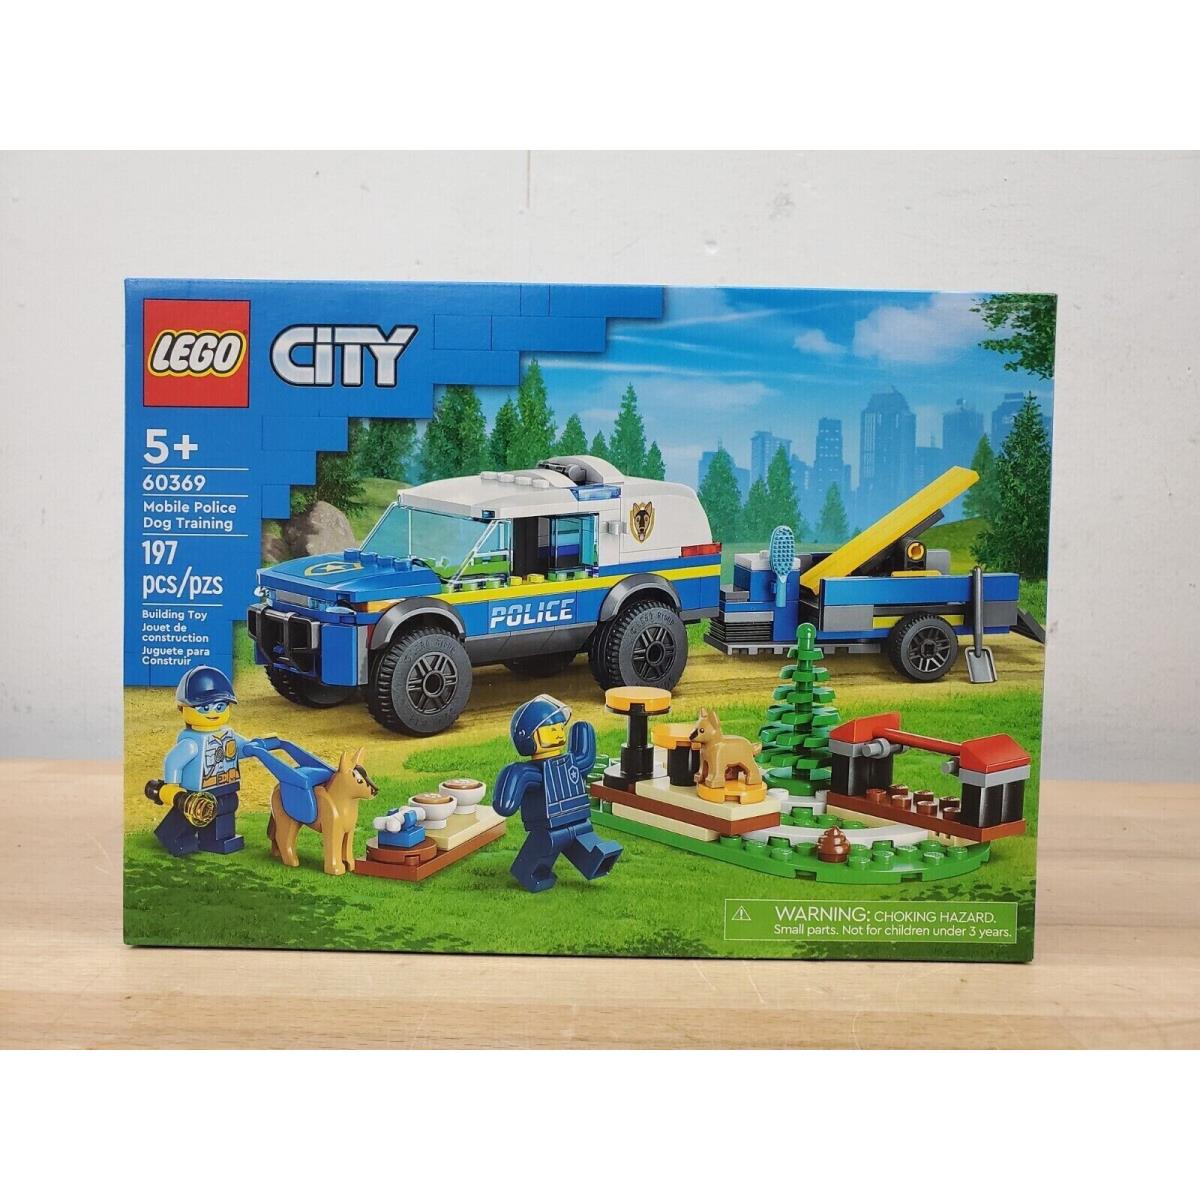 Lego City: Mobile Police Dog Training 60369 Building Set